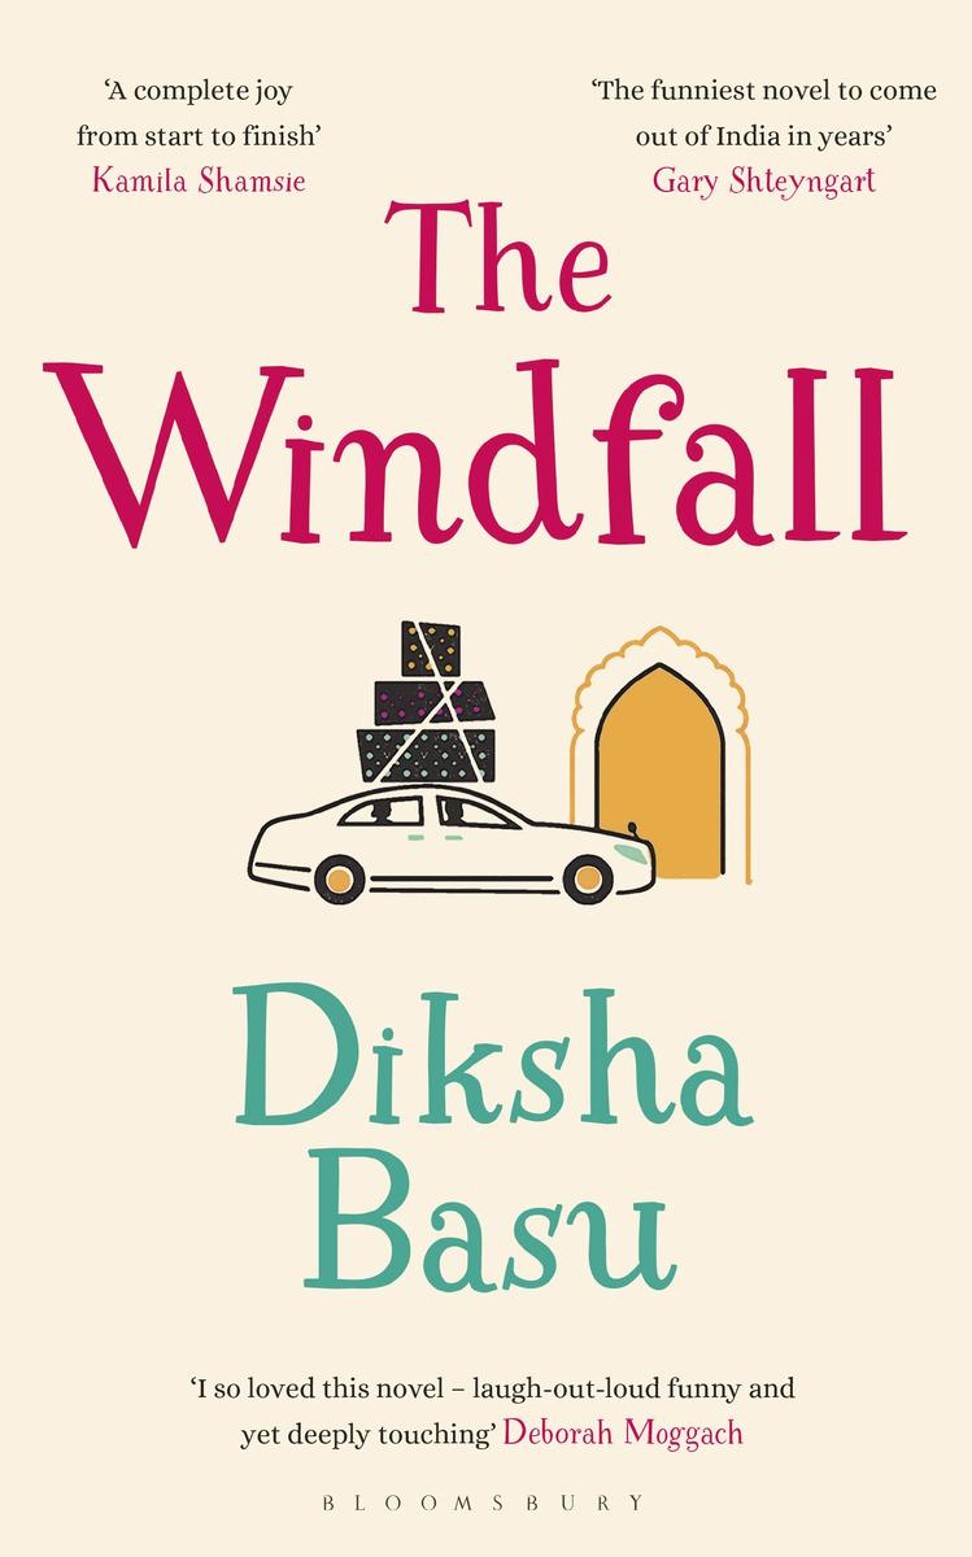 The cover of Diksha Basu’s novel.